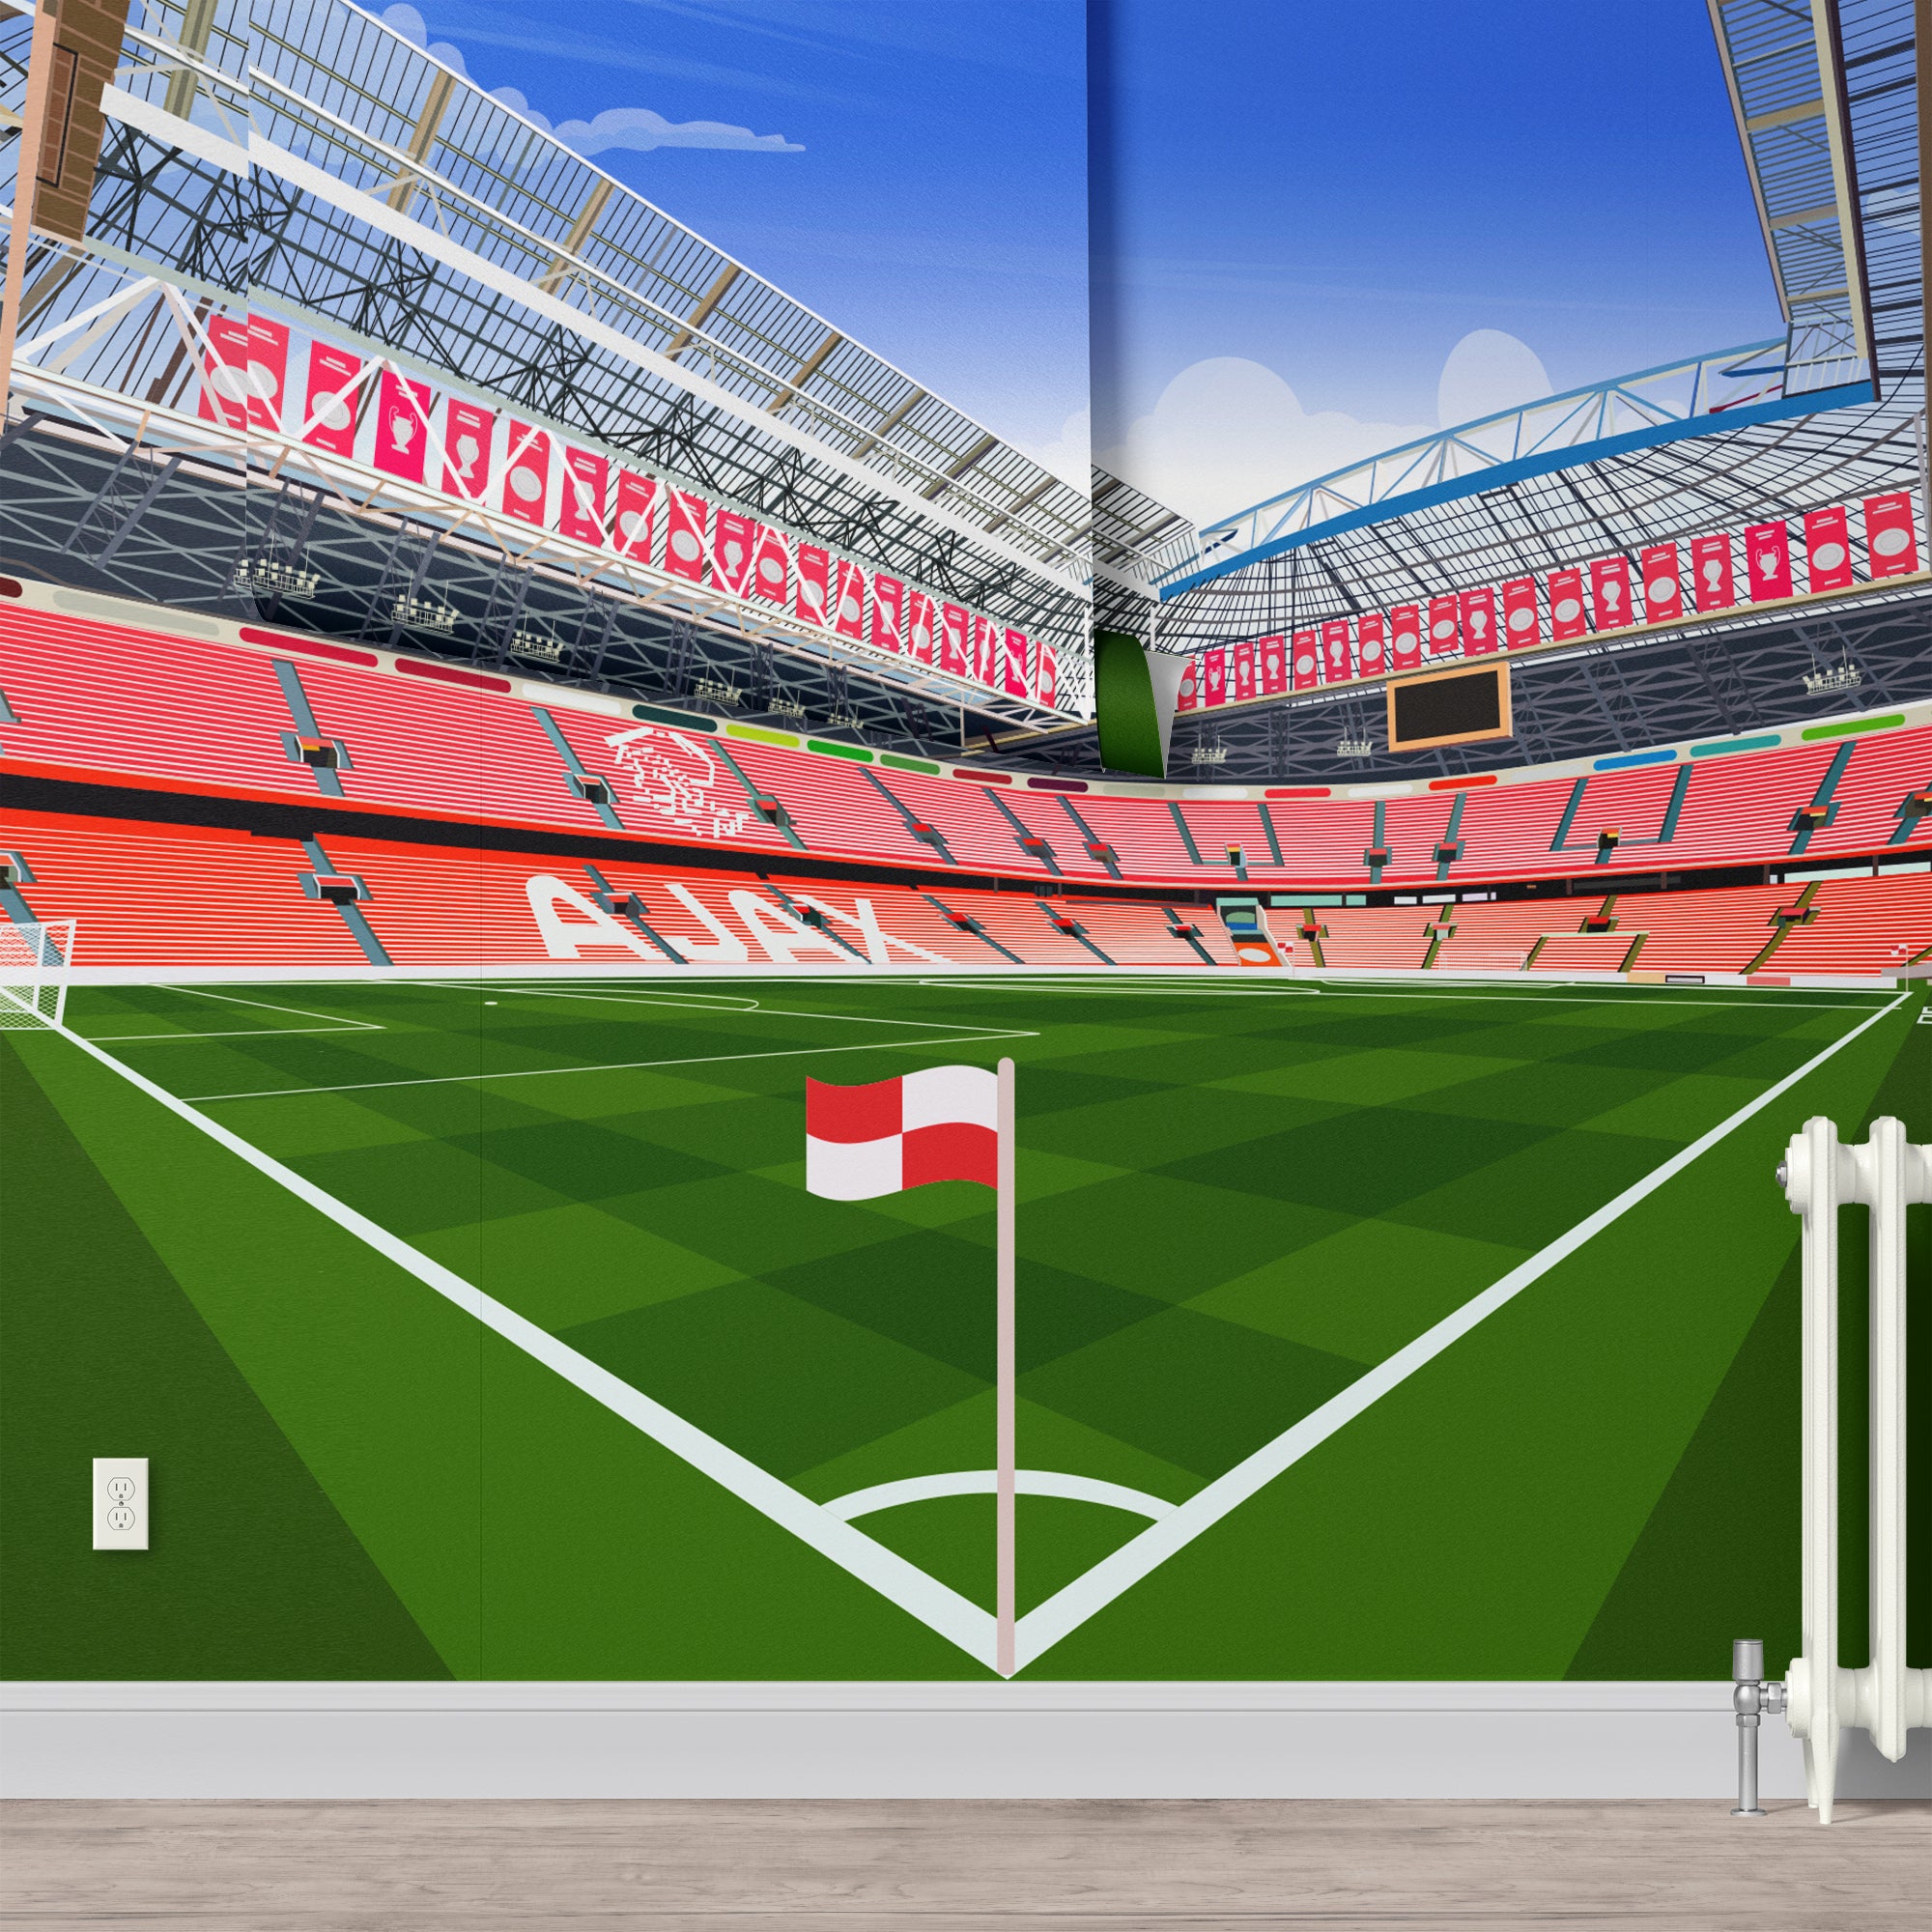 Johan Cruyff Arena - AFC Ajax Amsterdam Stadium